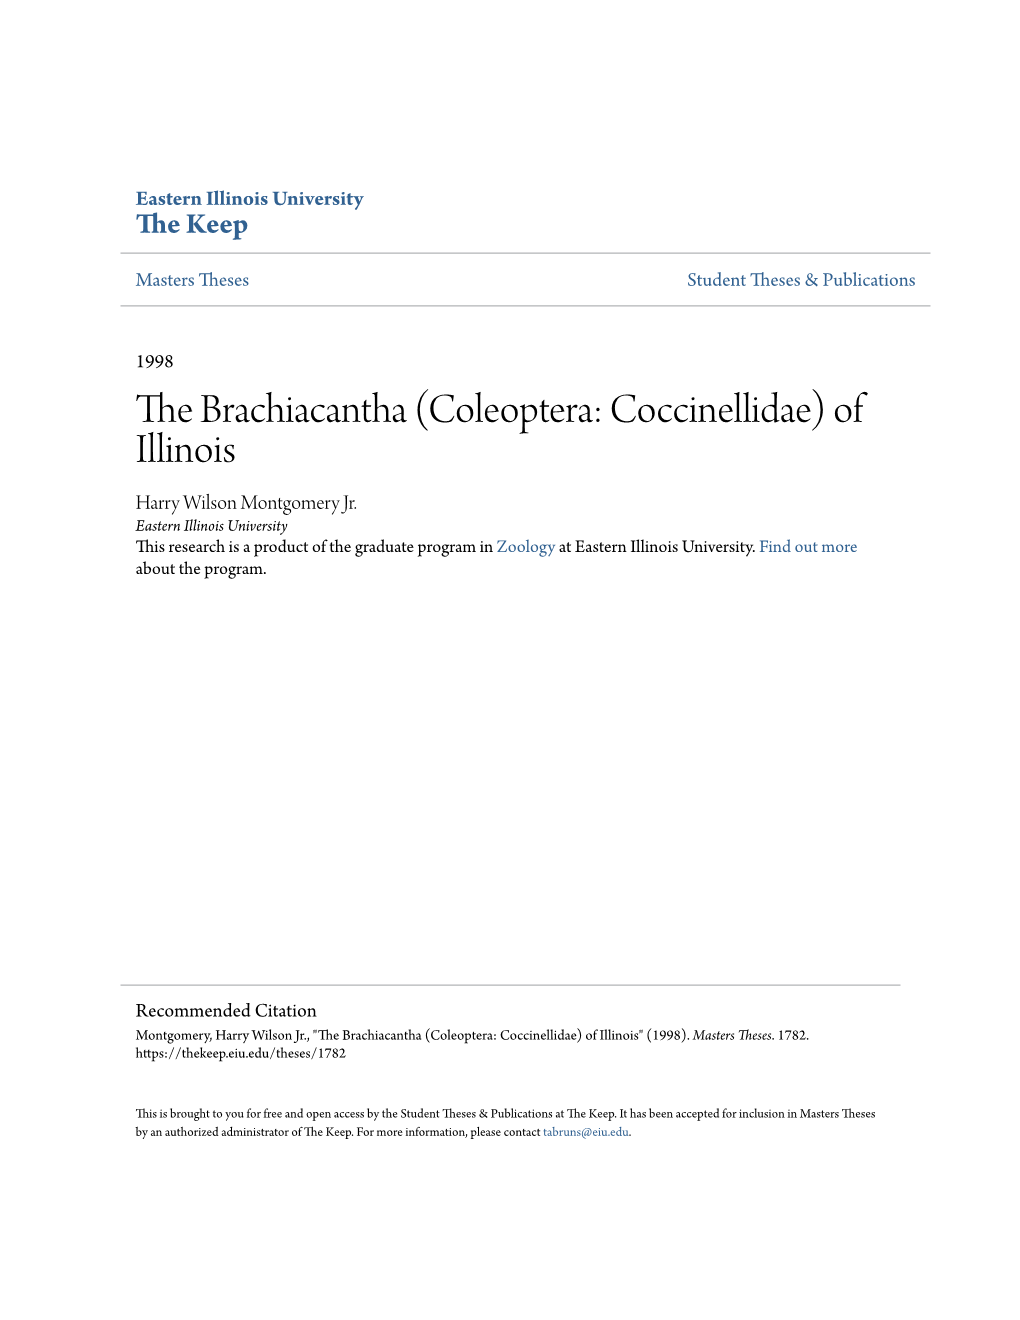 The Brachiacantha (Coleoptera: Coccinellidae)